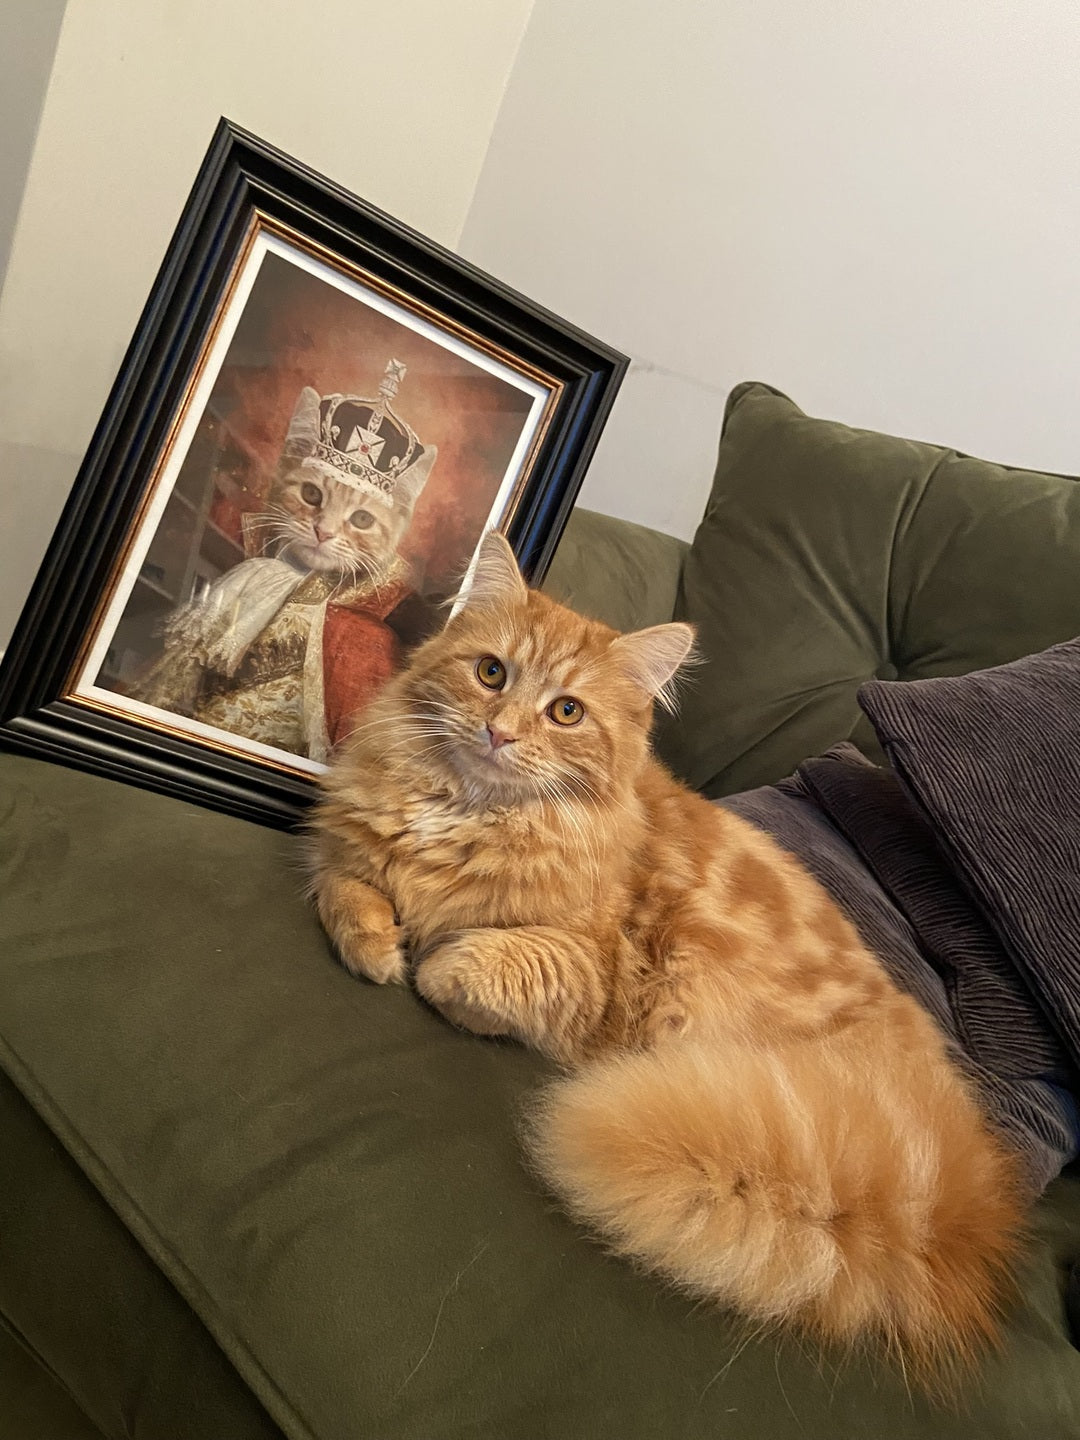 The King – Custom Vintage Pet Canvas